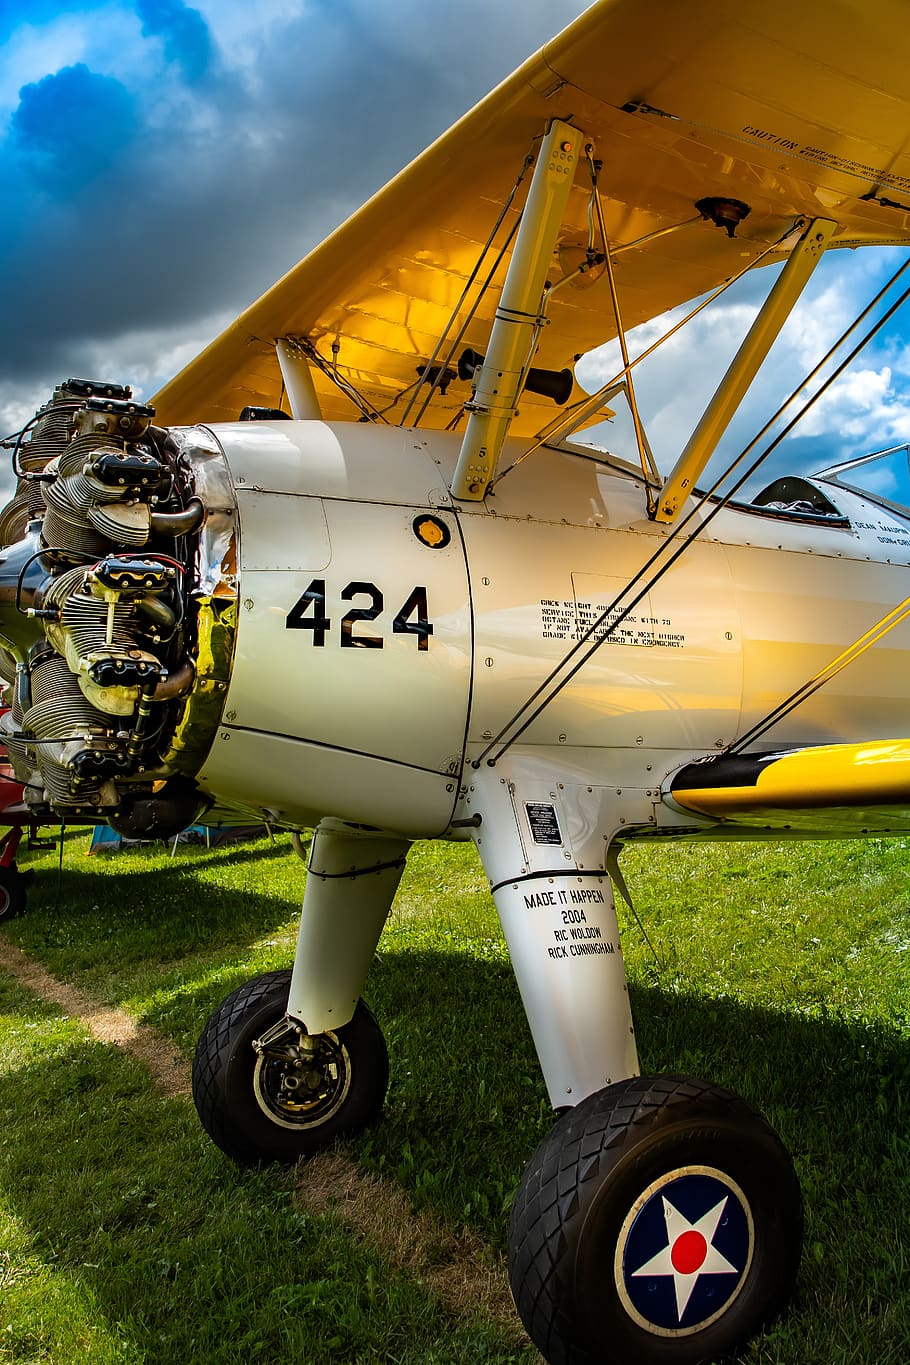 vintage, aviation, aircraft, classic, propeller, airplane, fly, aeroplane, nostalgic, mode of transportation